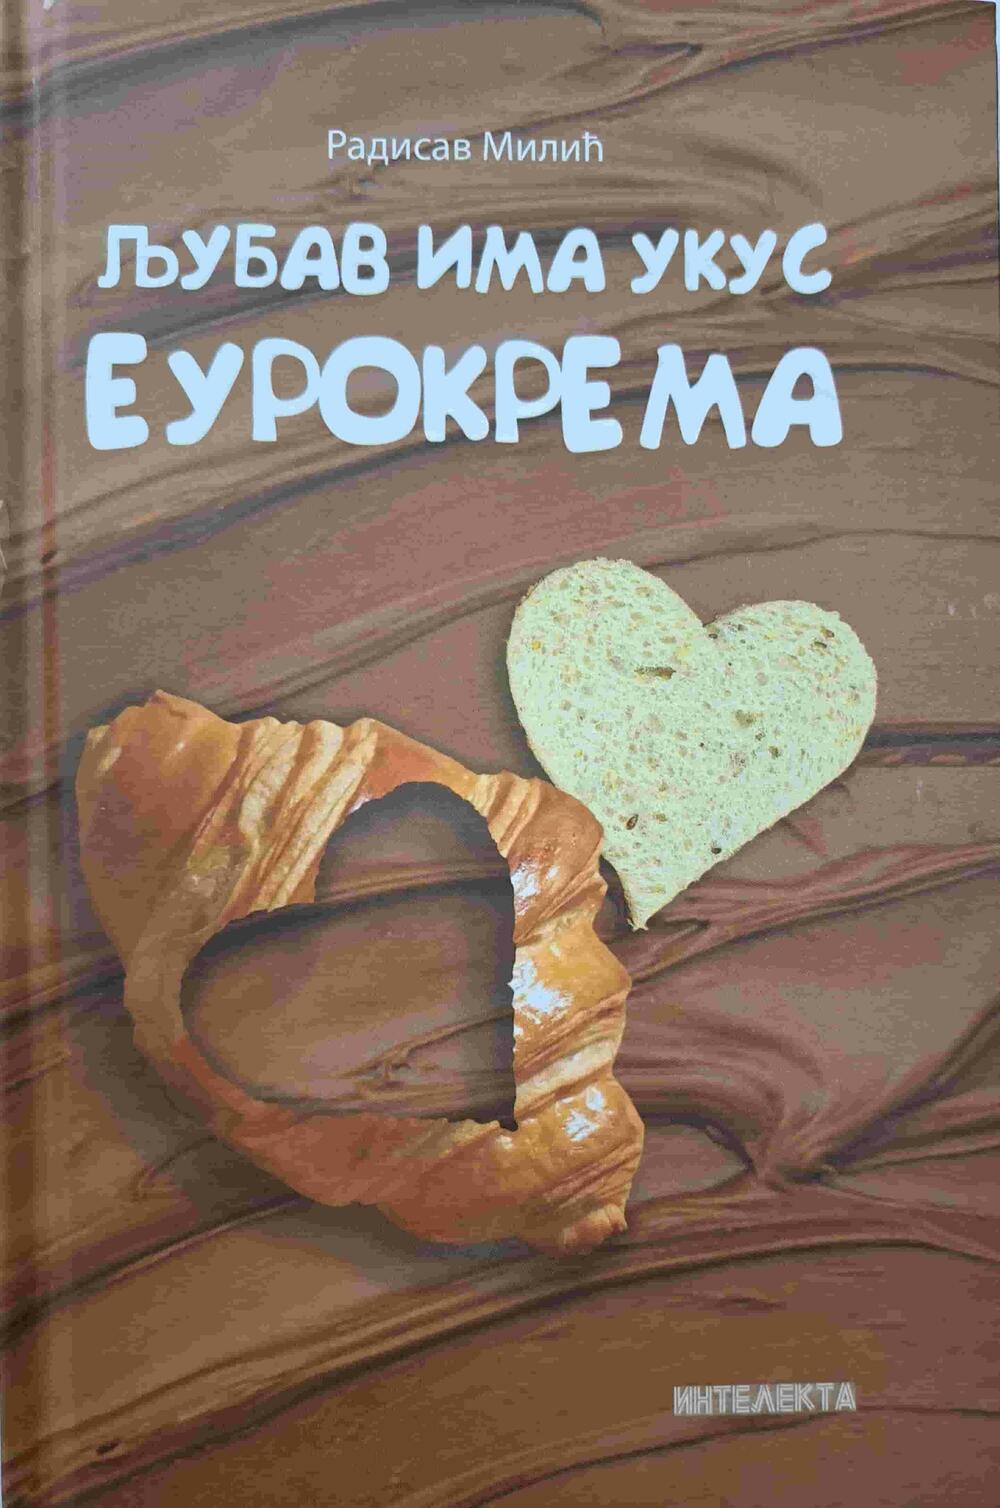 Korice romana 'ljubav ima ukus eurokrema'